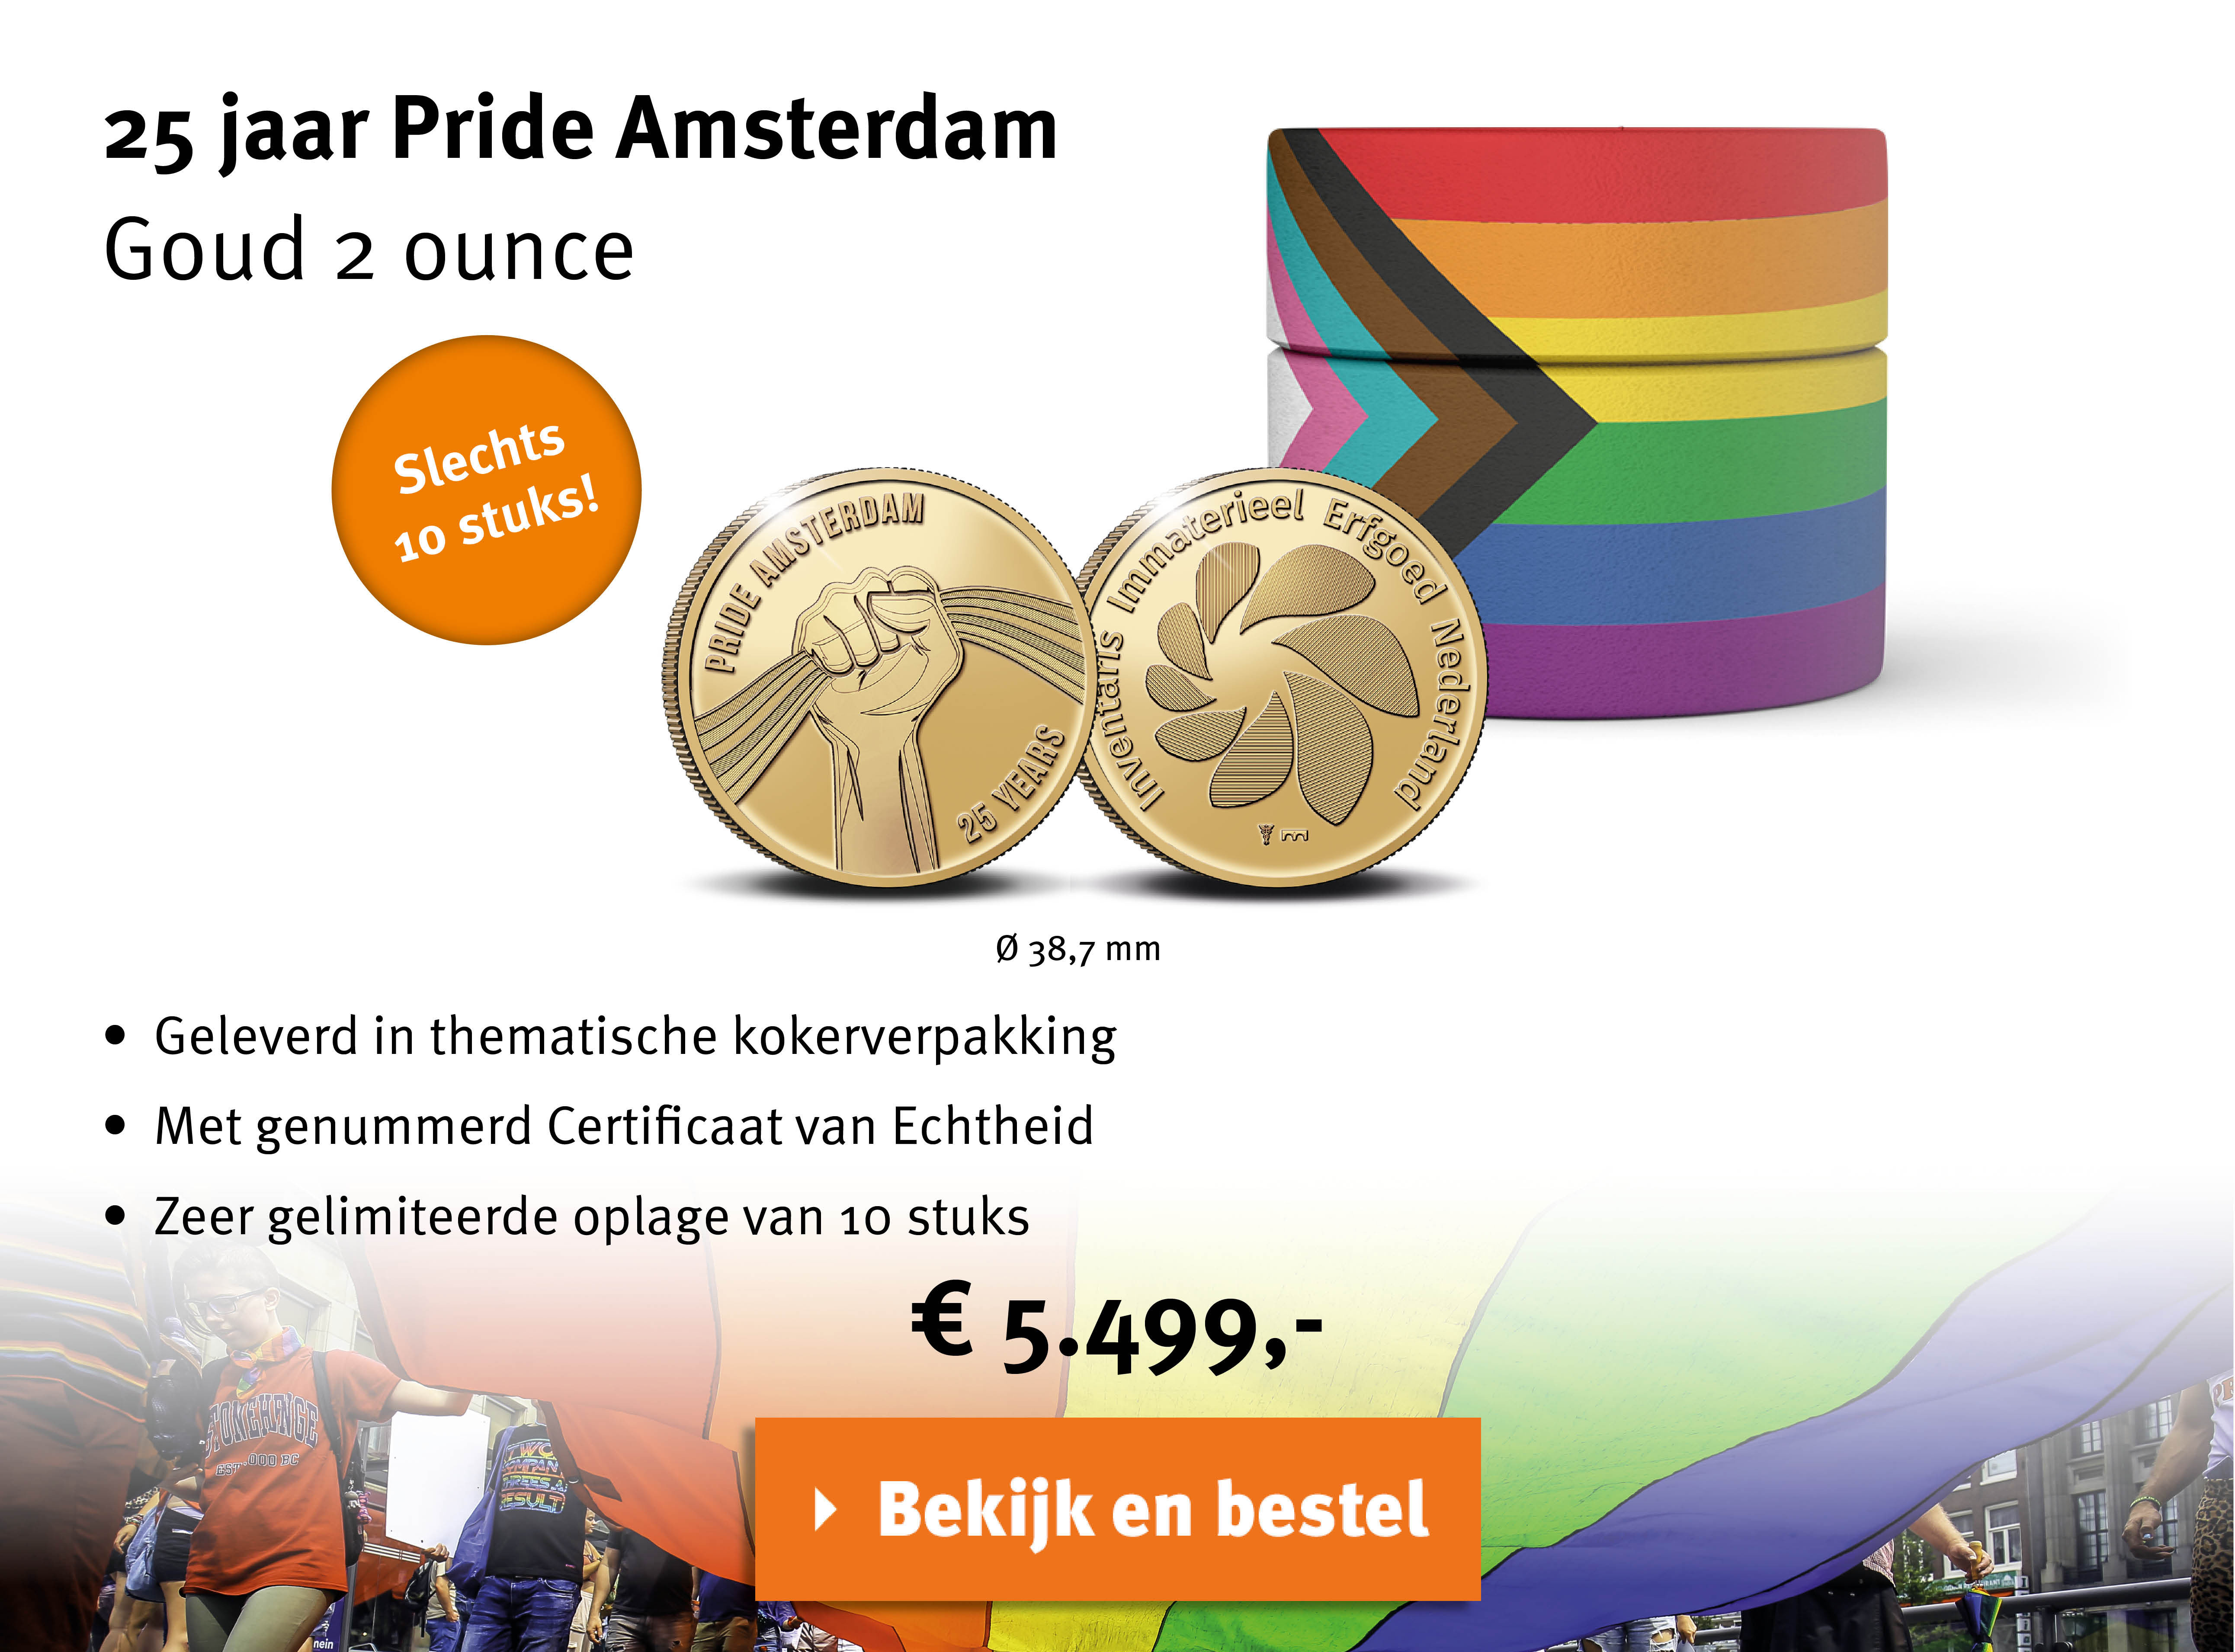 Bekijk en bestel: 25 jaar Pride Amsterdam Goud 2 ounce